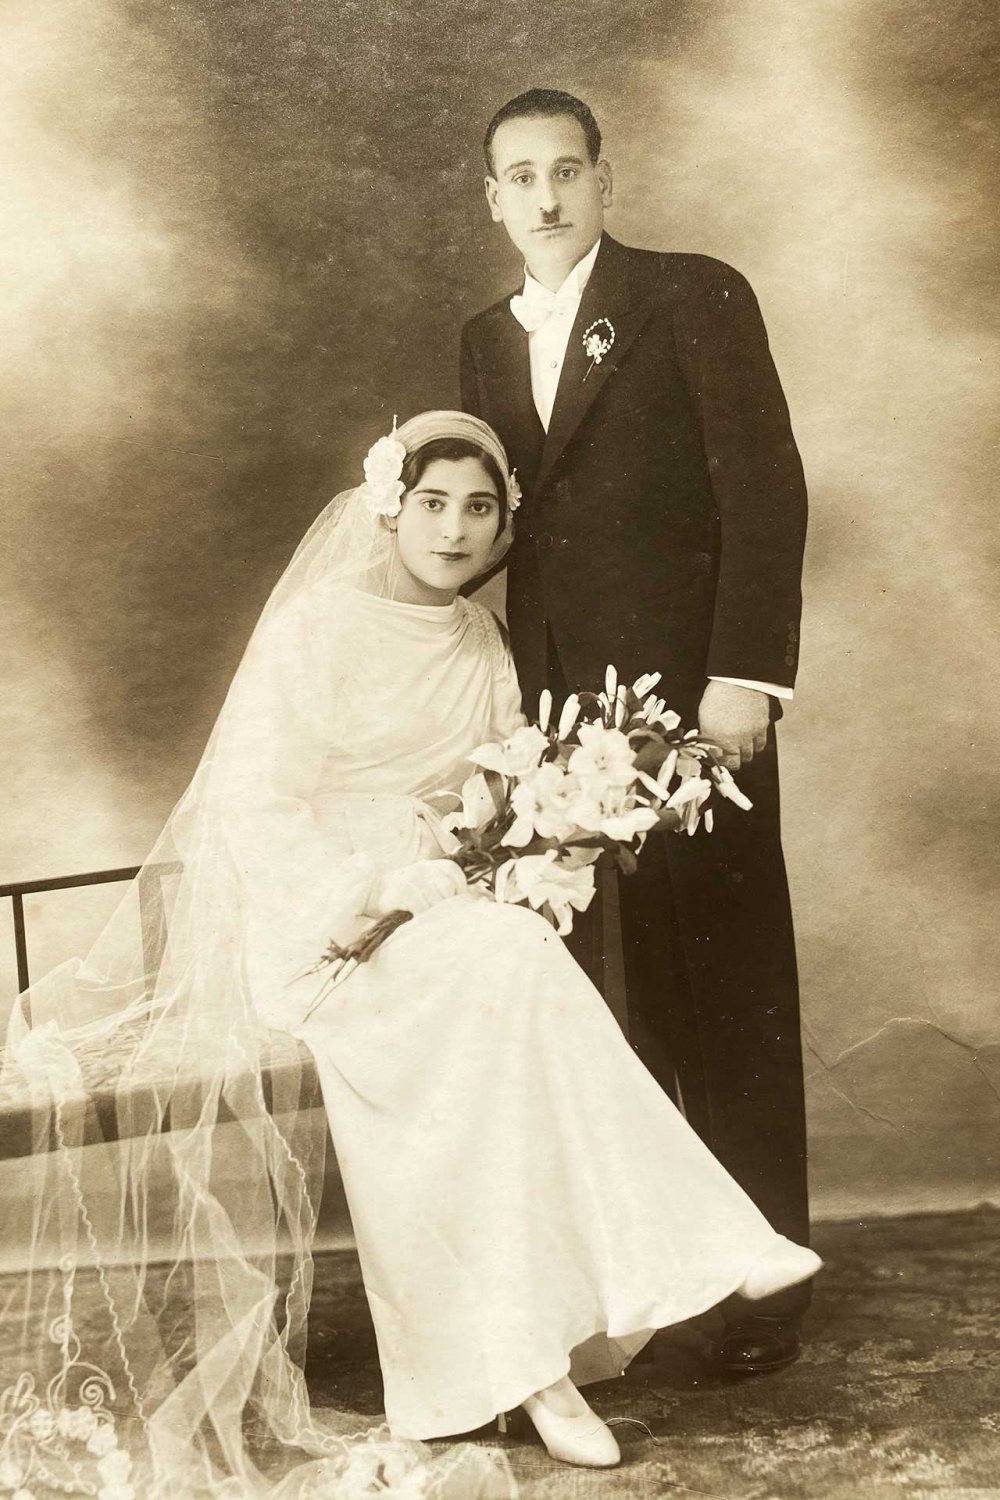 Jerusalem residents Nada Adranly and Shafiq Bazouzi get married in 1935.